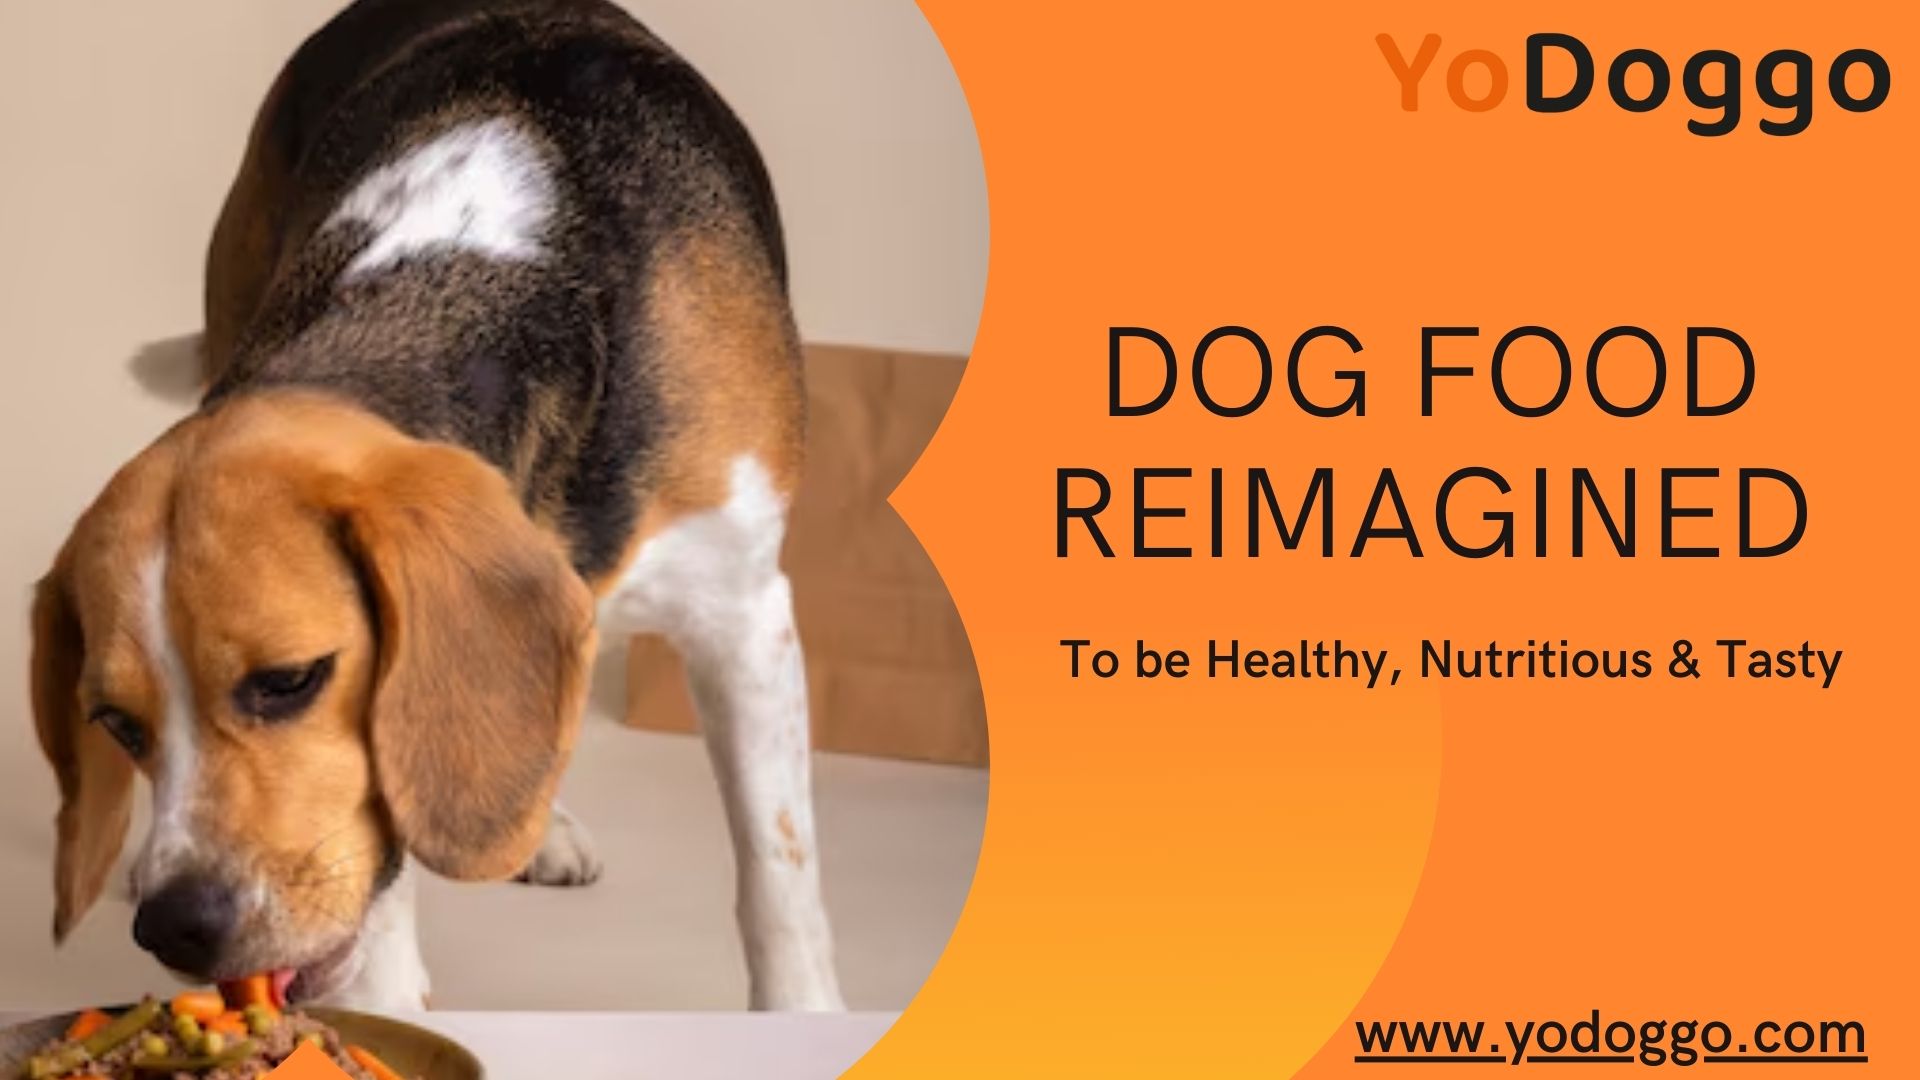 Transform your Dog's world with Yodoggo's Healthy Food